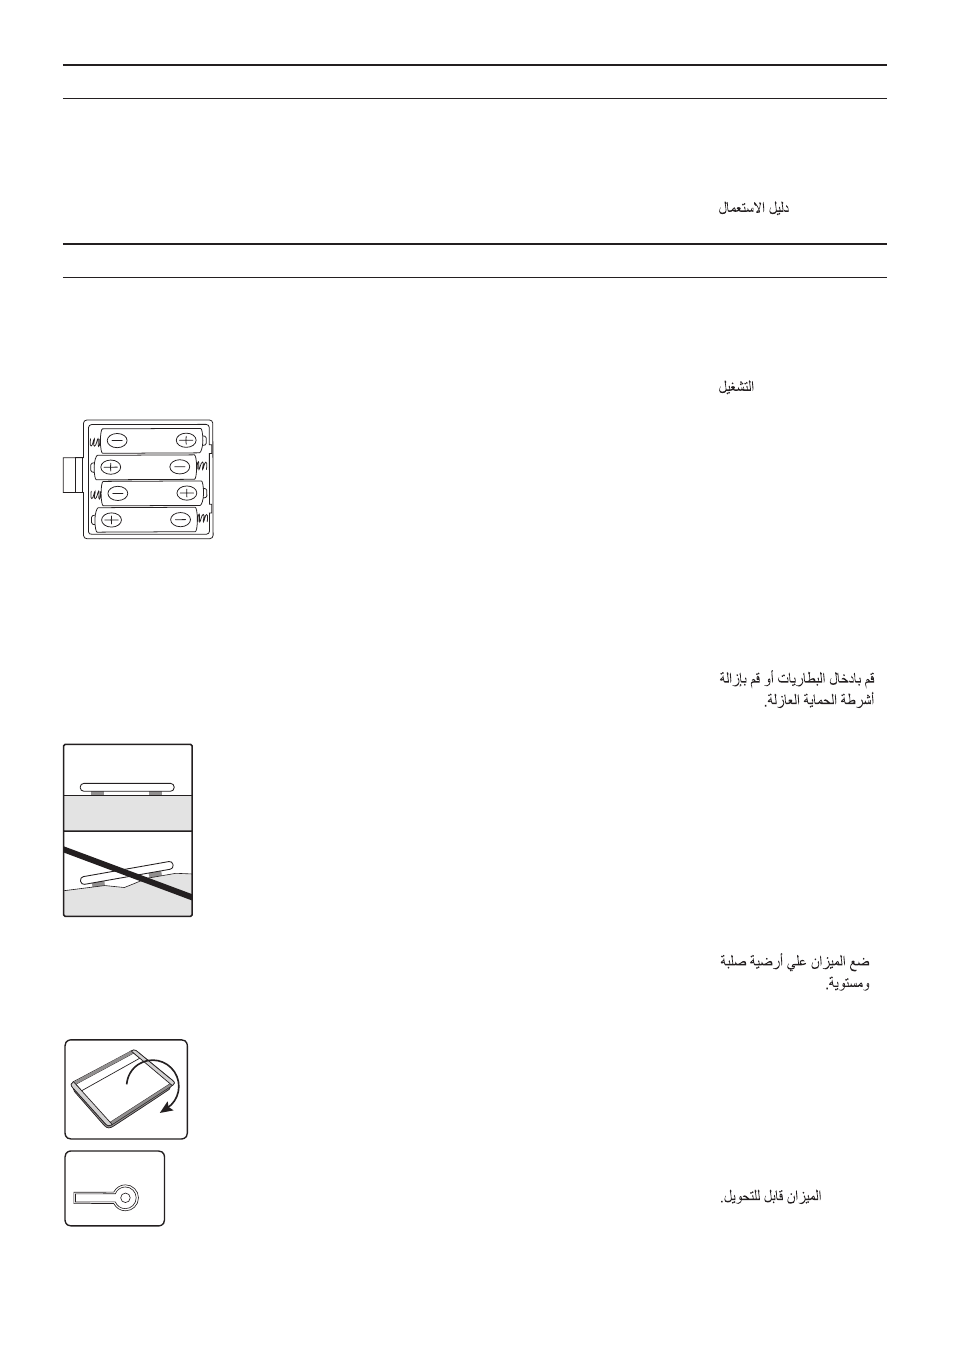 Gebrauchsanleitung 1. inbetriebnahme | Beurer PS 890 User Manual | Page 2 /  12